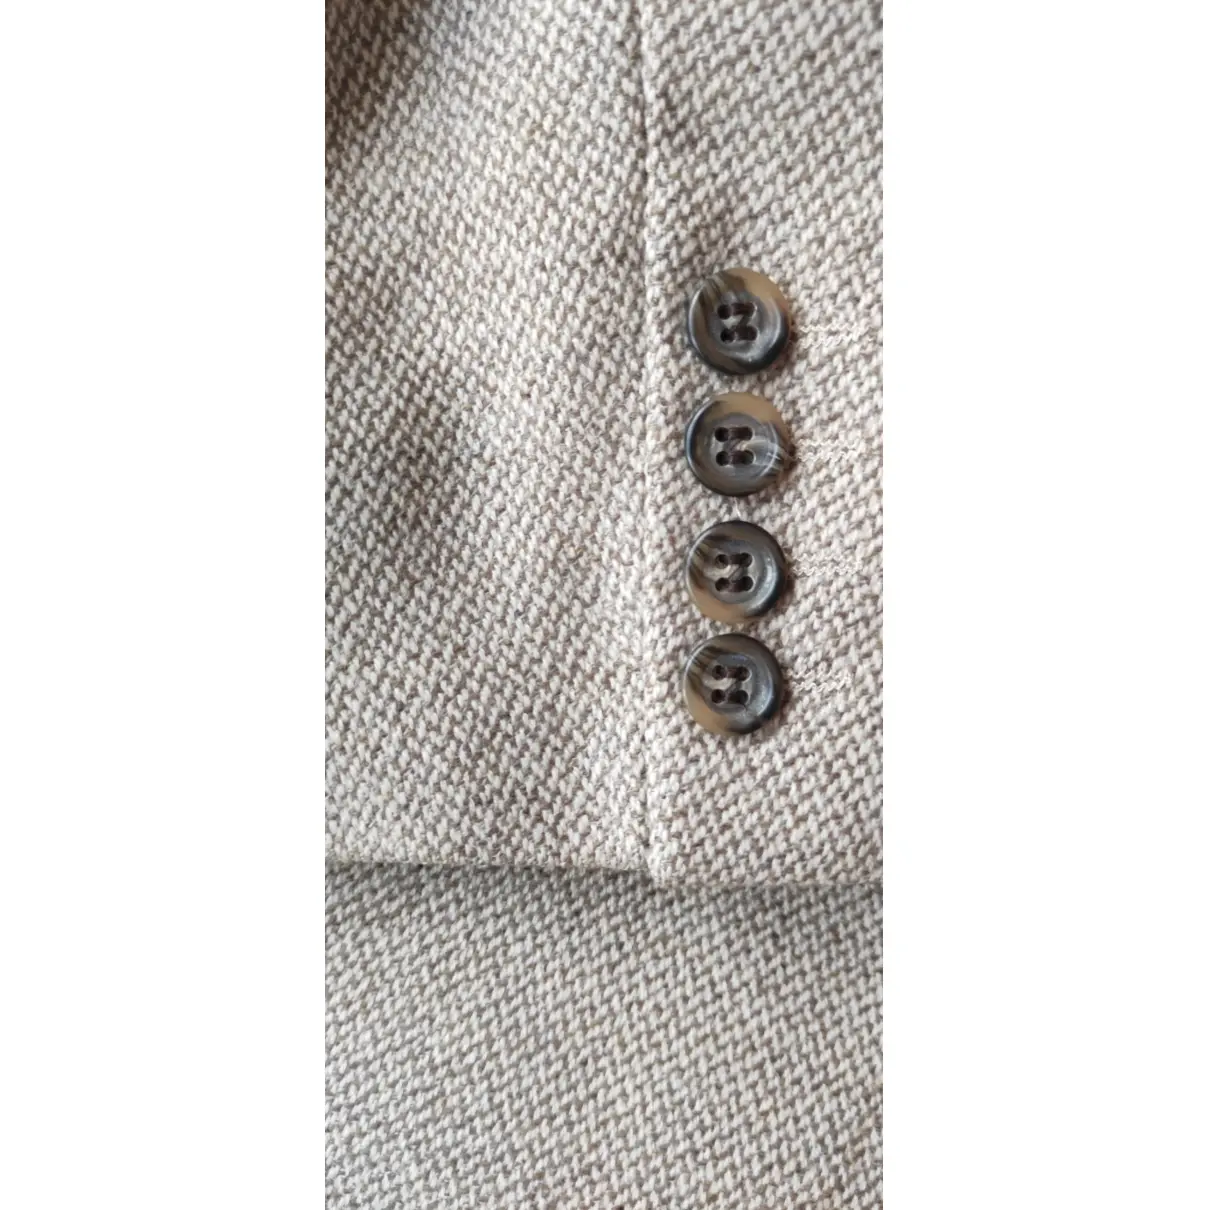 Wool vest Yves Saint Laurent - Vintage